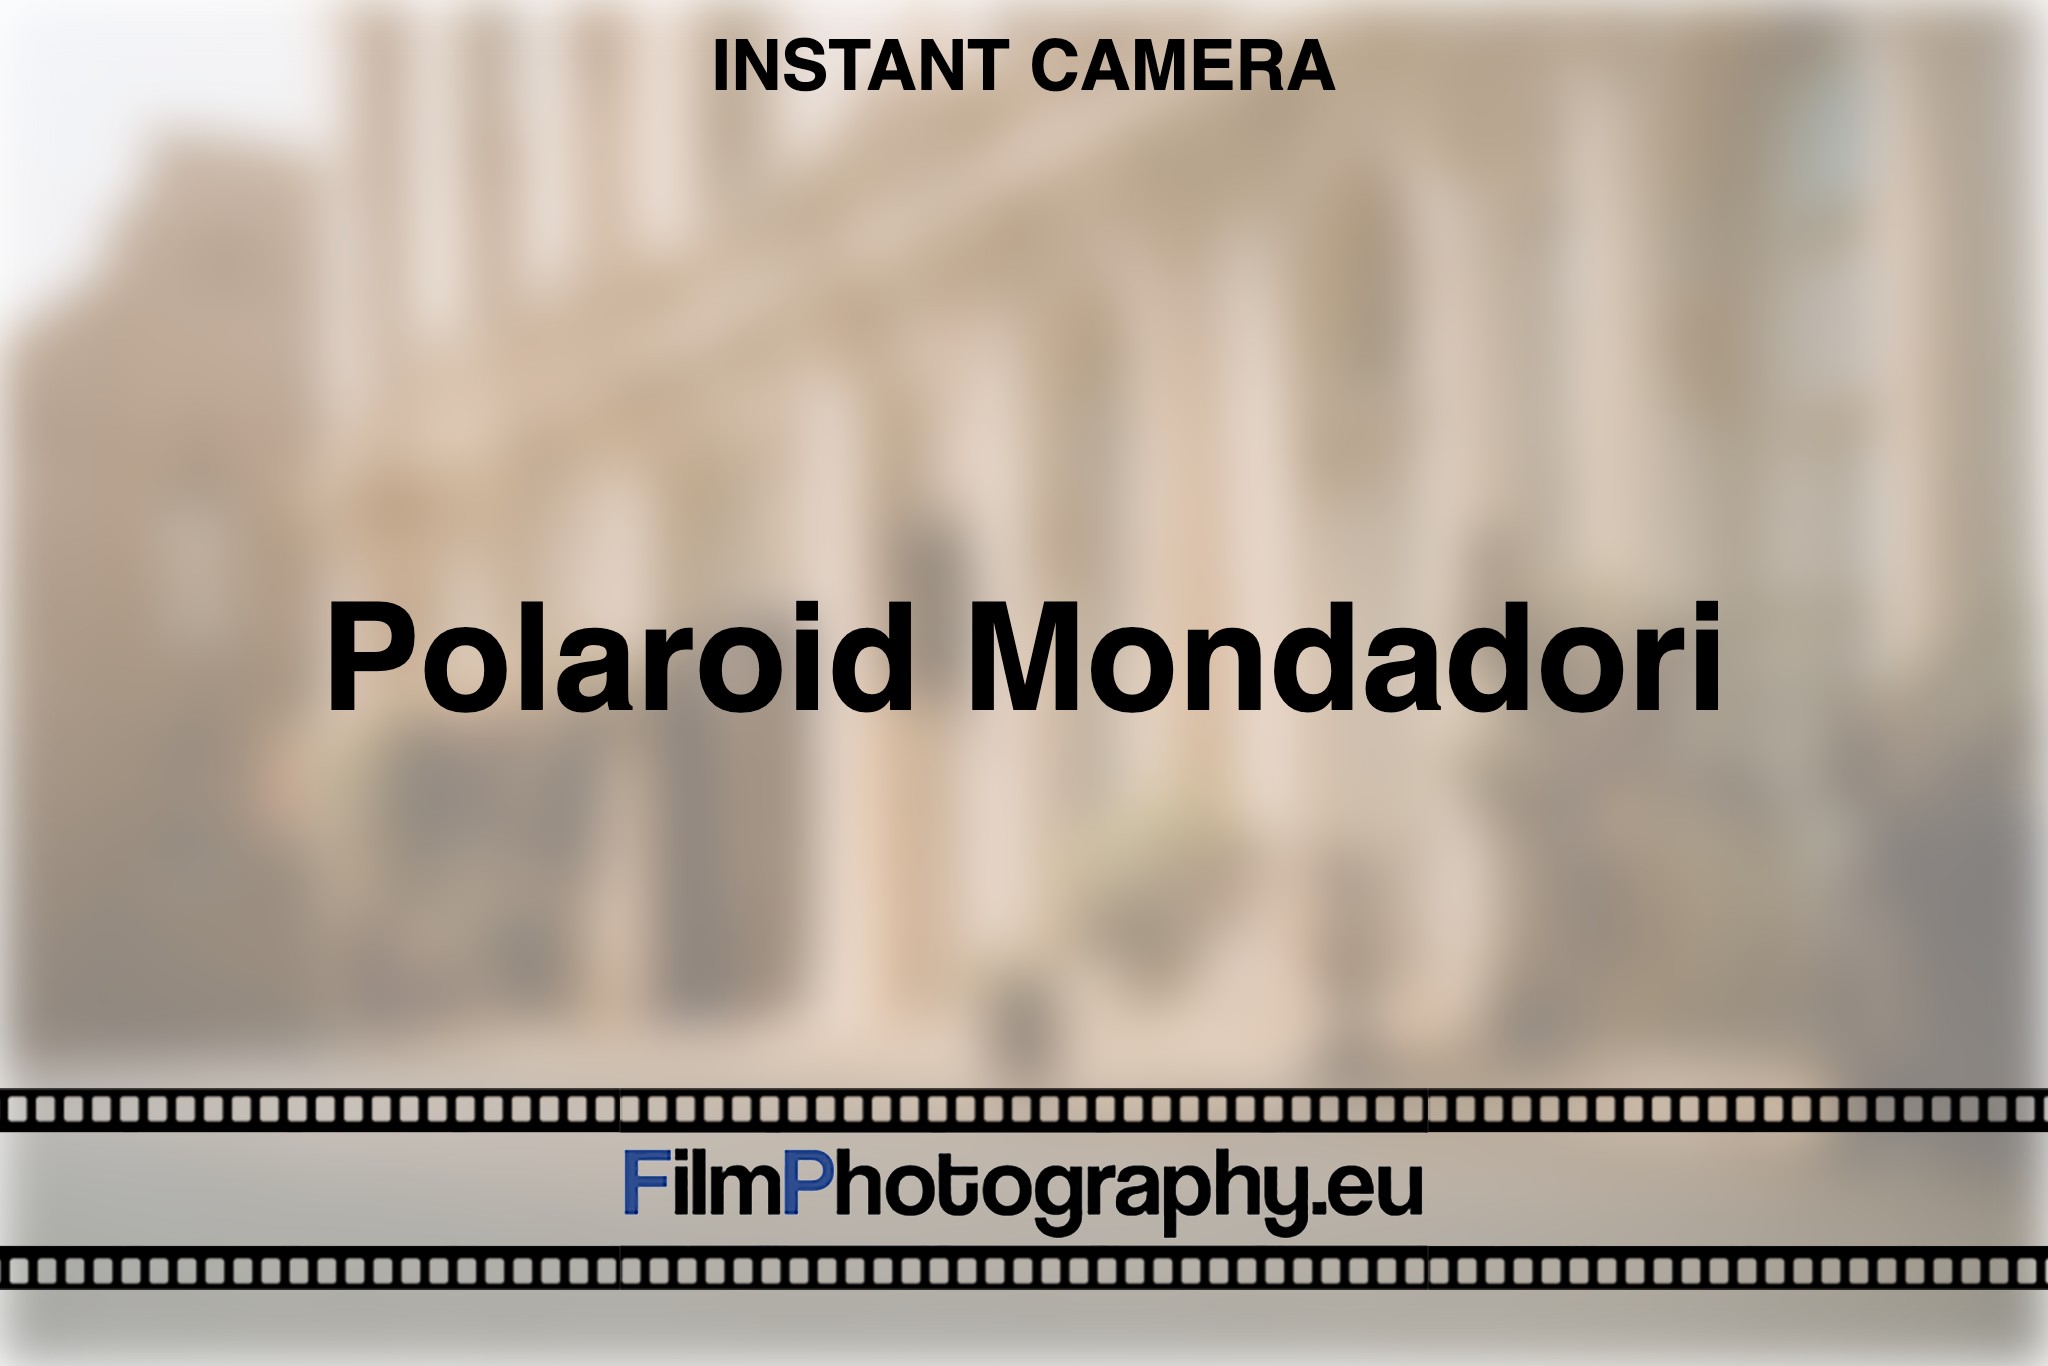 polaroid-mondadori-instant-camera-bnv